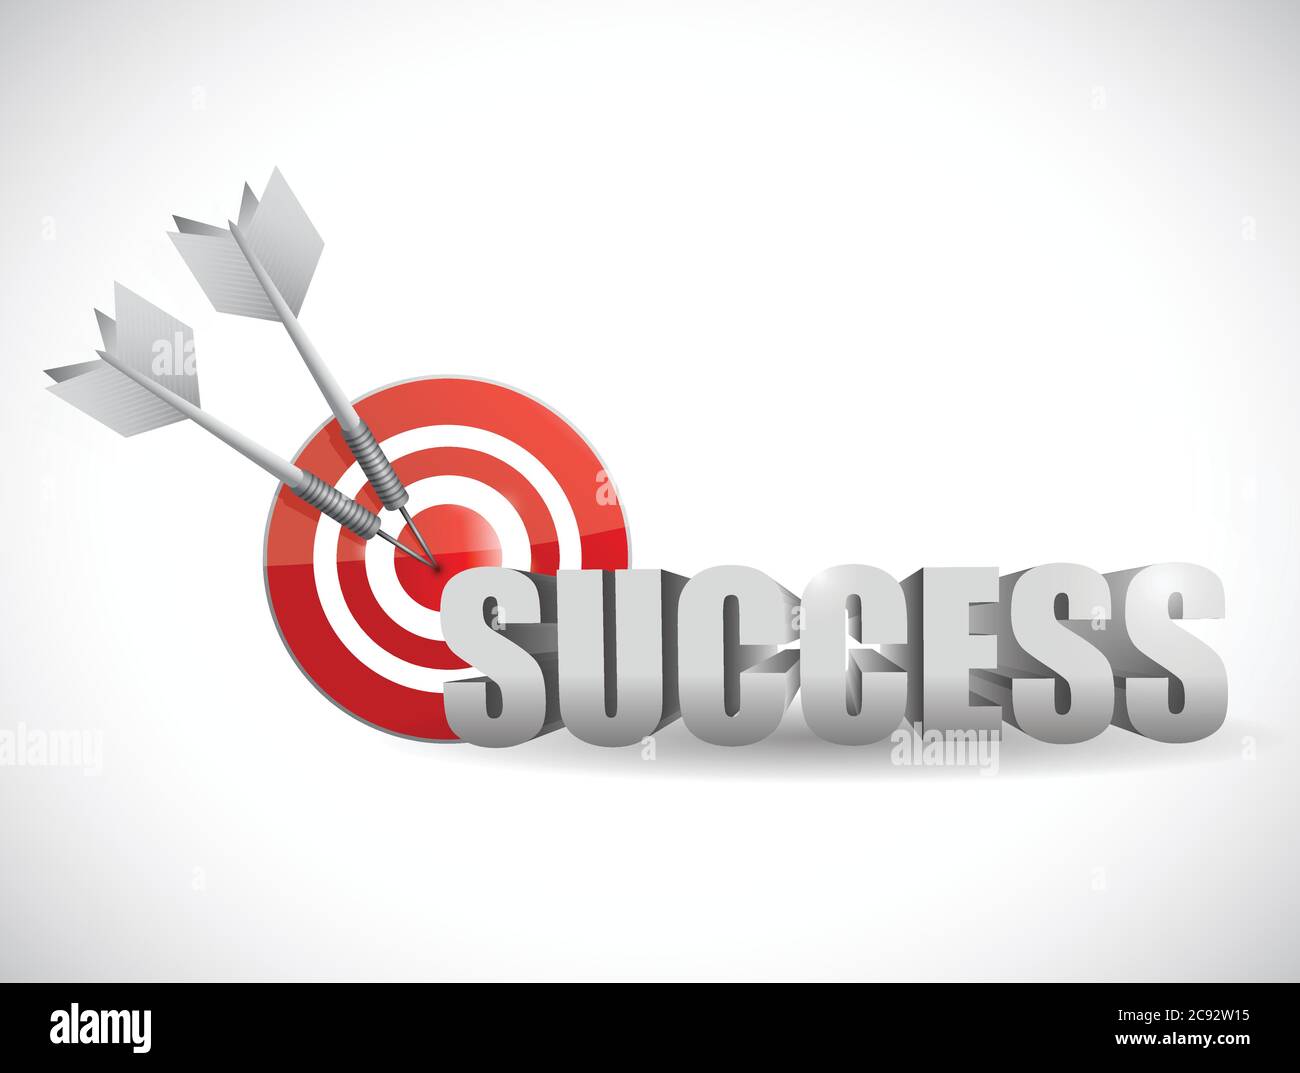 Success bulls eye target illustration design over a white background Stock Vector